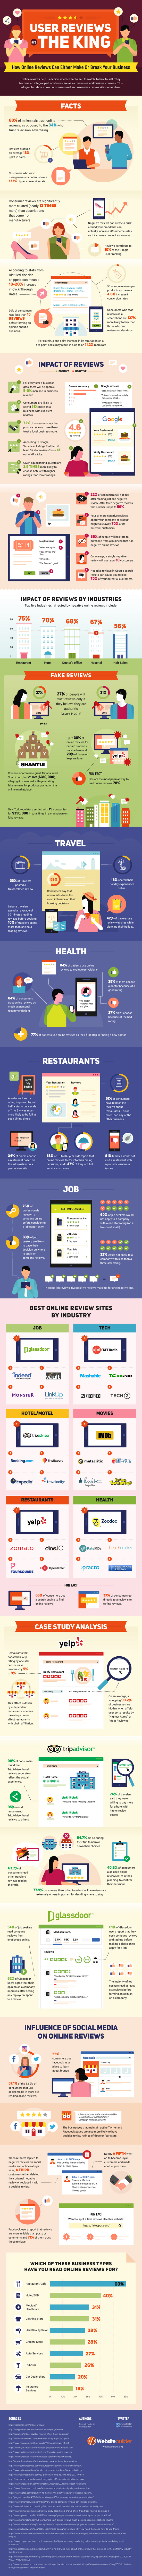 https://websitebuilder.org/resources/online-reviews-infographic/